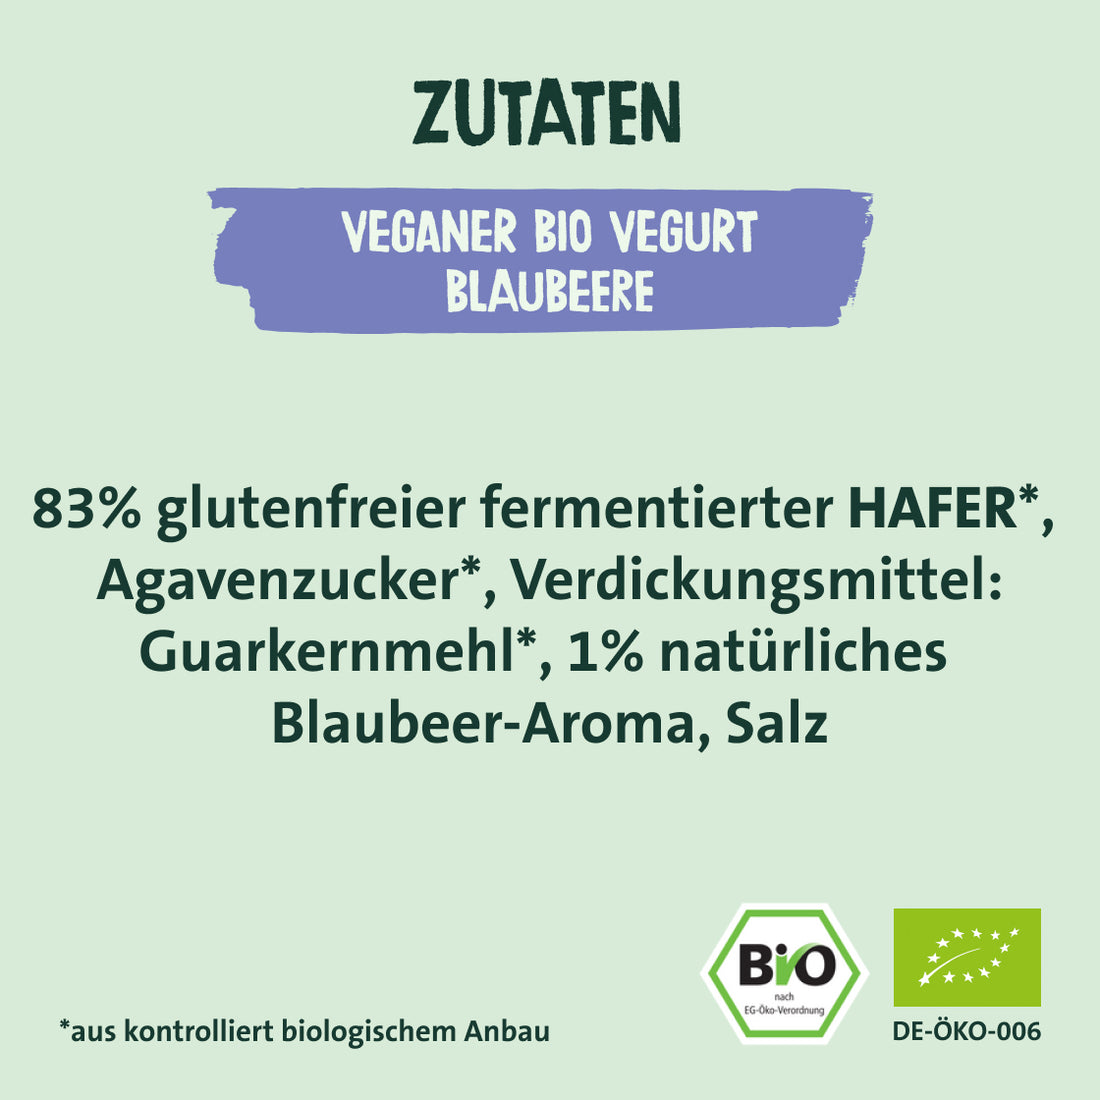 Vegane Vegurt Probierbox